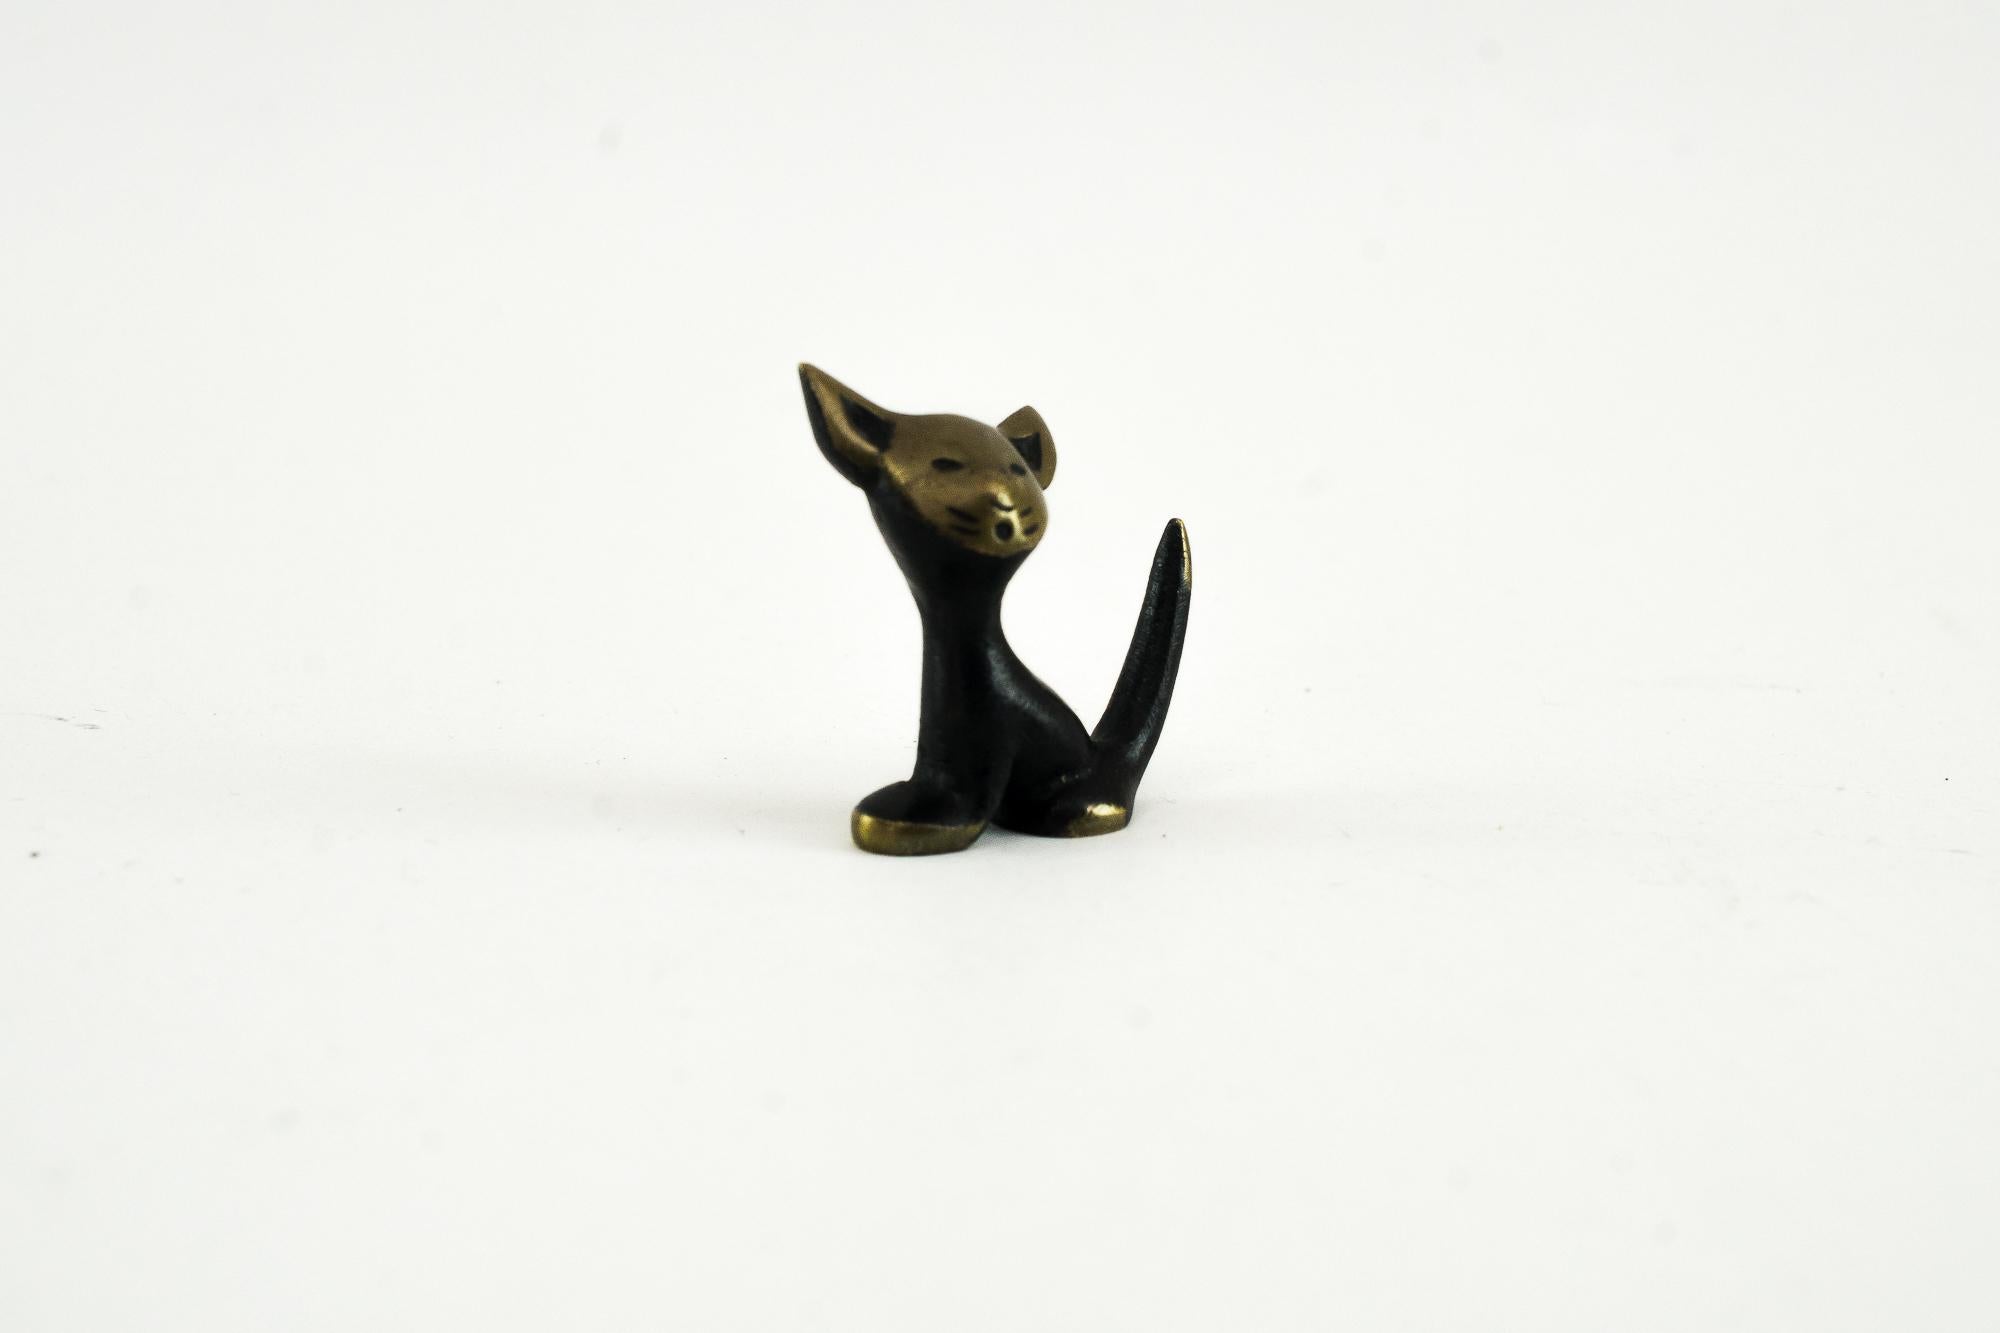 Figurine de chat de Walter Bosse
État original.